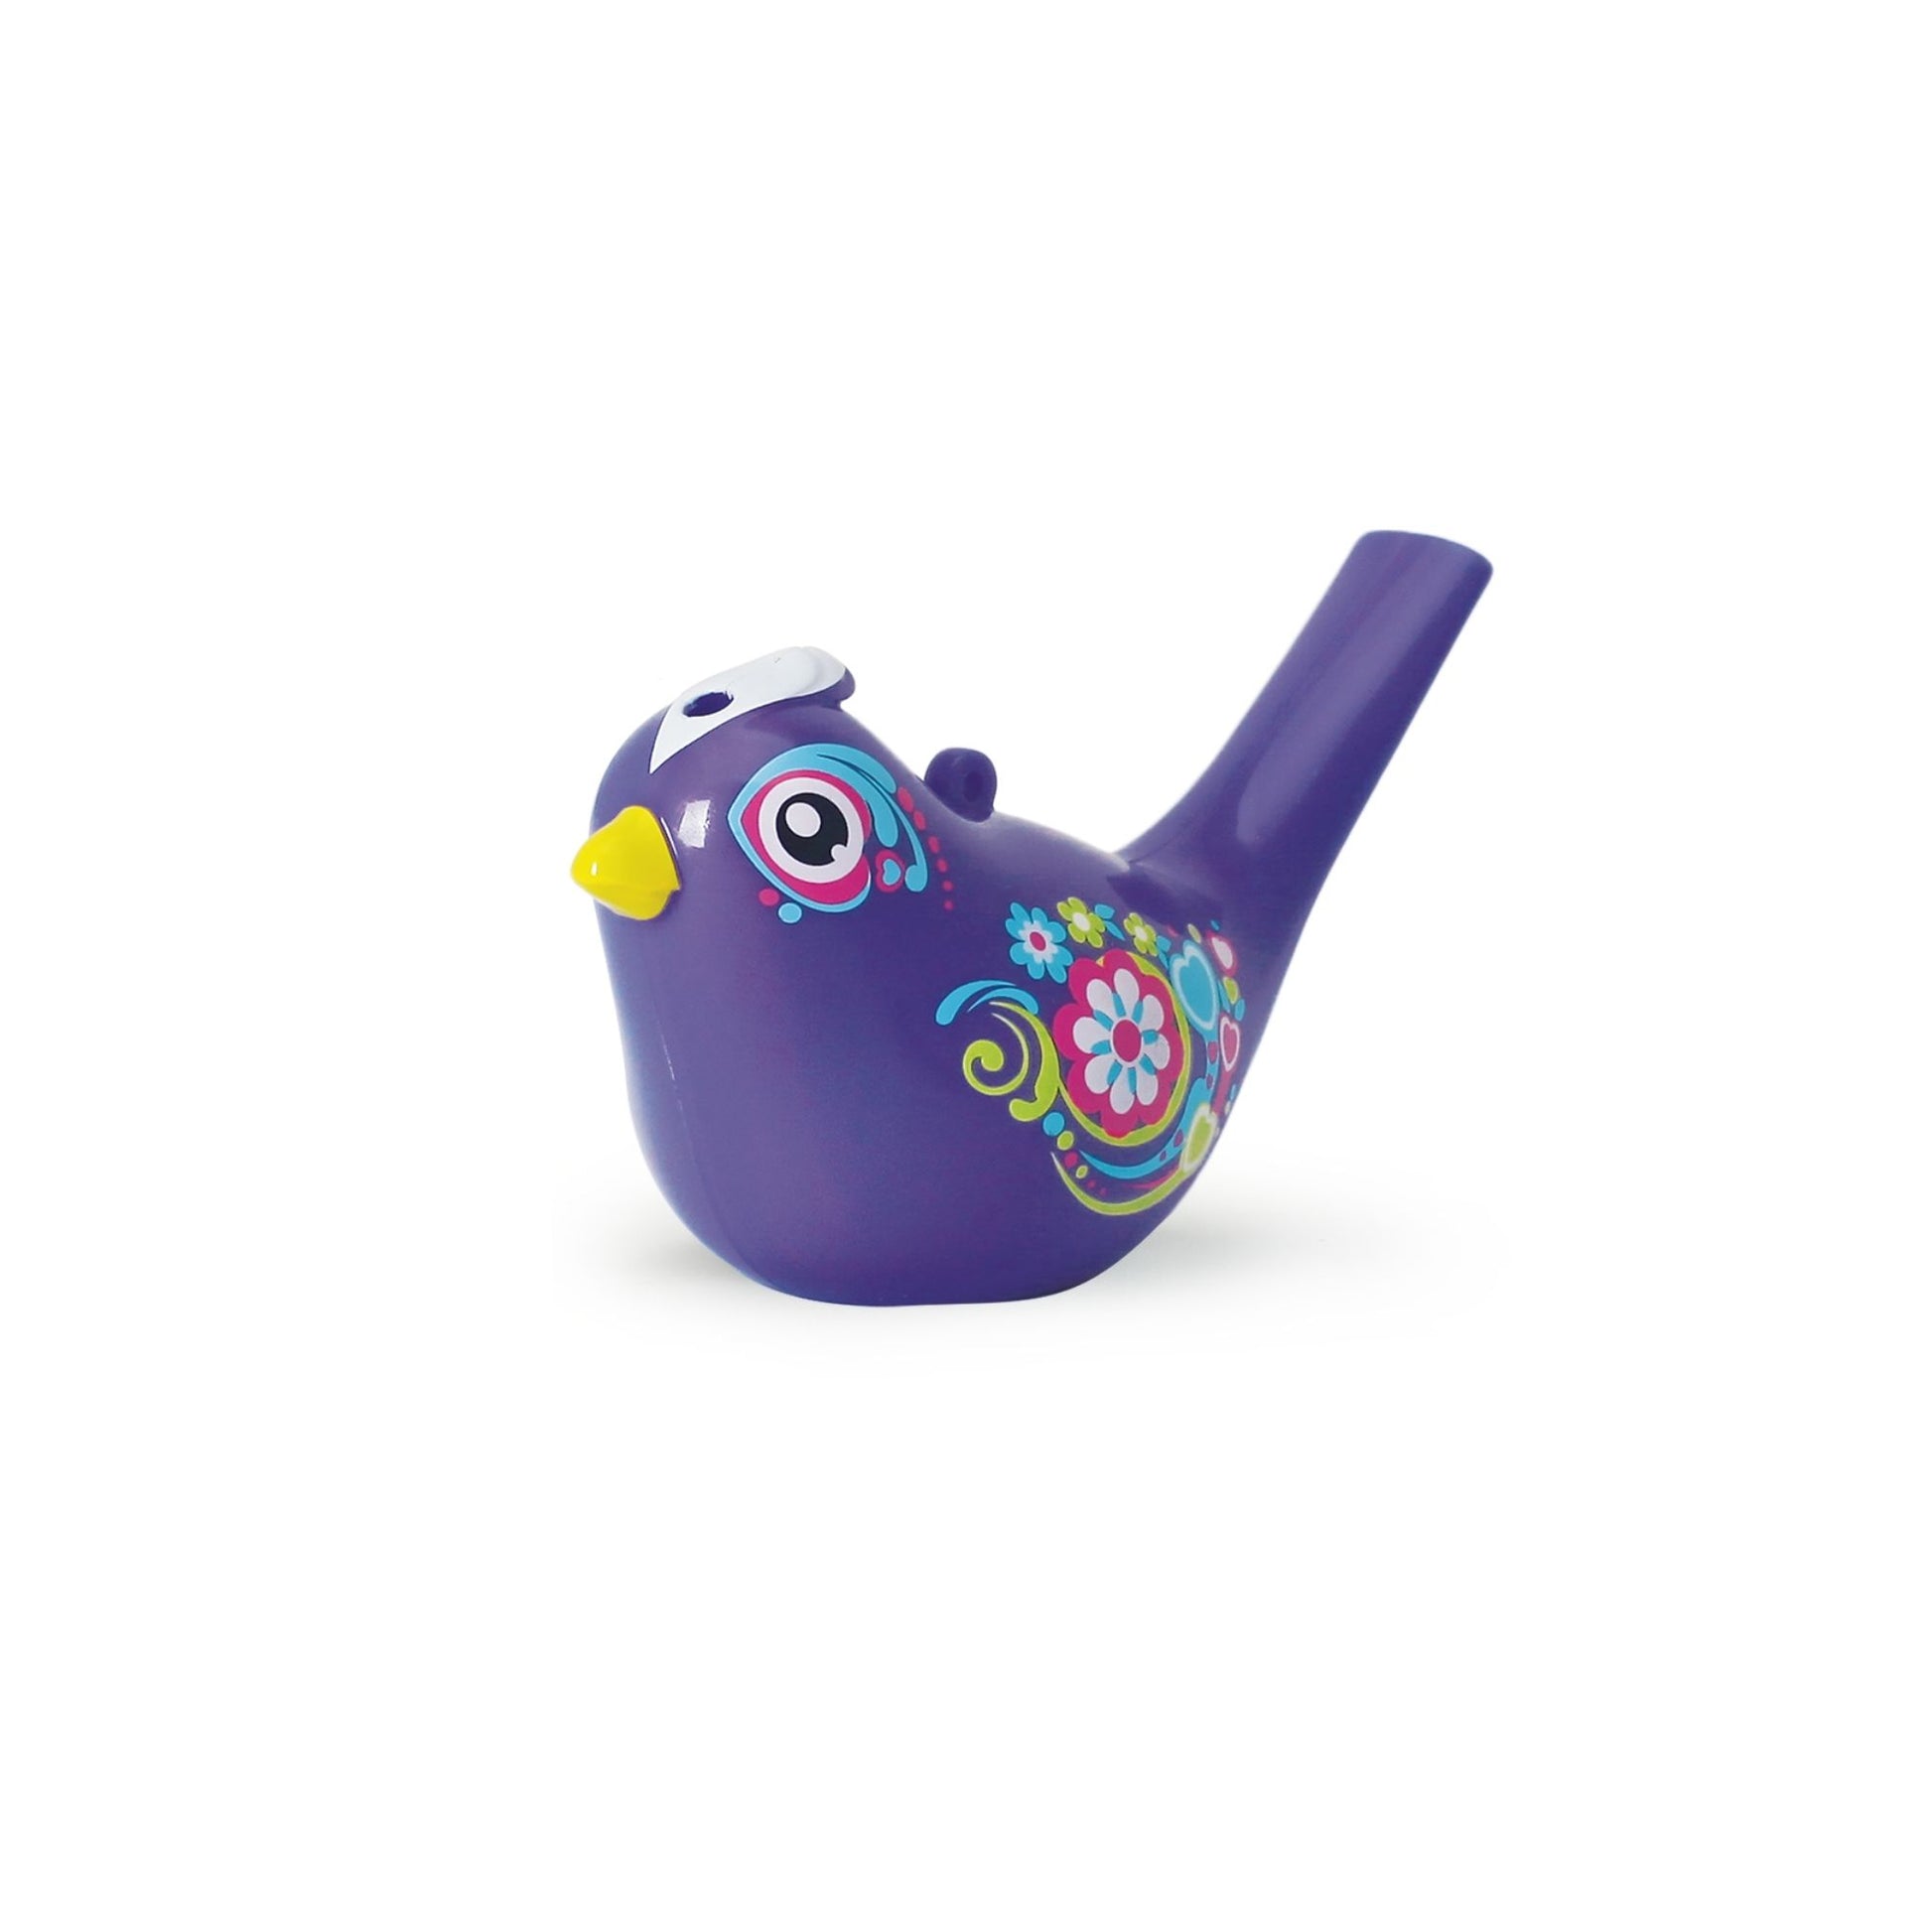 Hola Toys Colour Changing Bird Whistle Purple